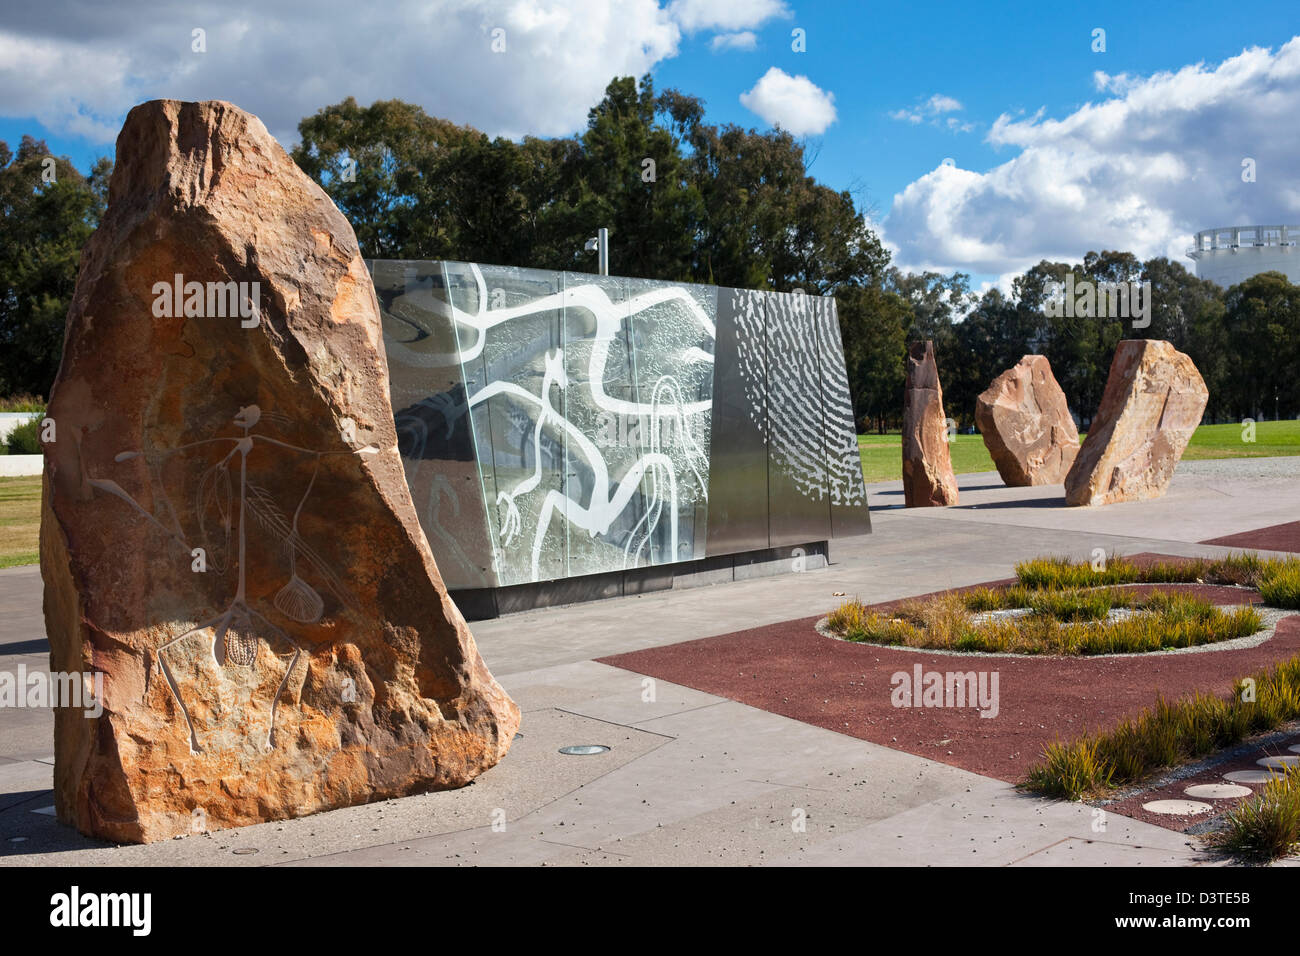 Indigene Kunst am Ort der Versöhnung. Canberra, Australian Capital Territory (ACT), Australien Stockfoto